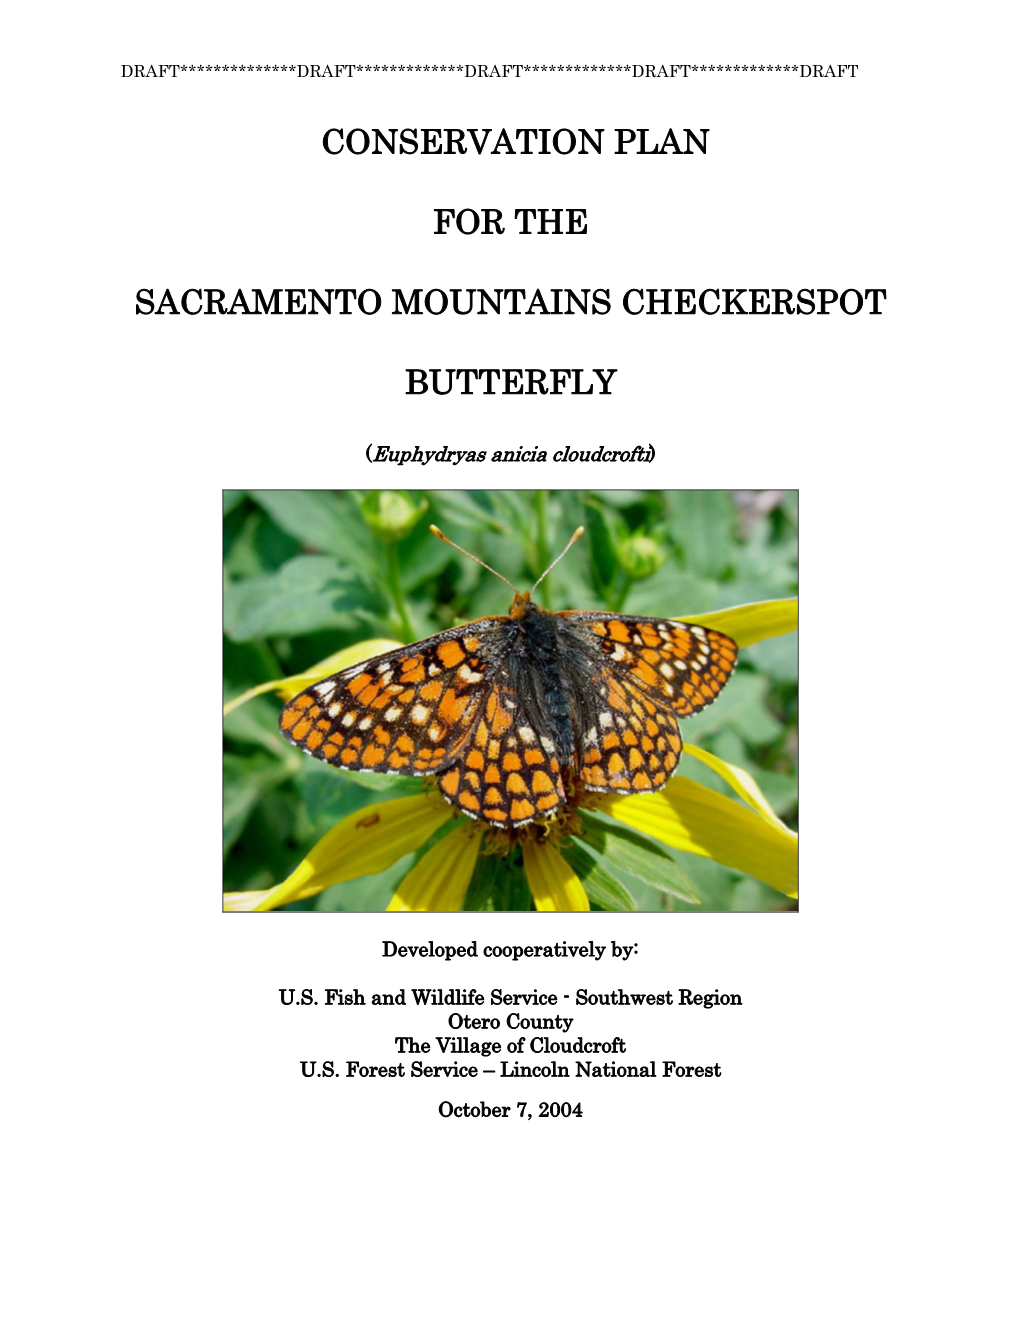 Sacramento Mountains Checkerspot Butterfly (Euphydryas Anicia Cloudcrofti)